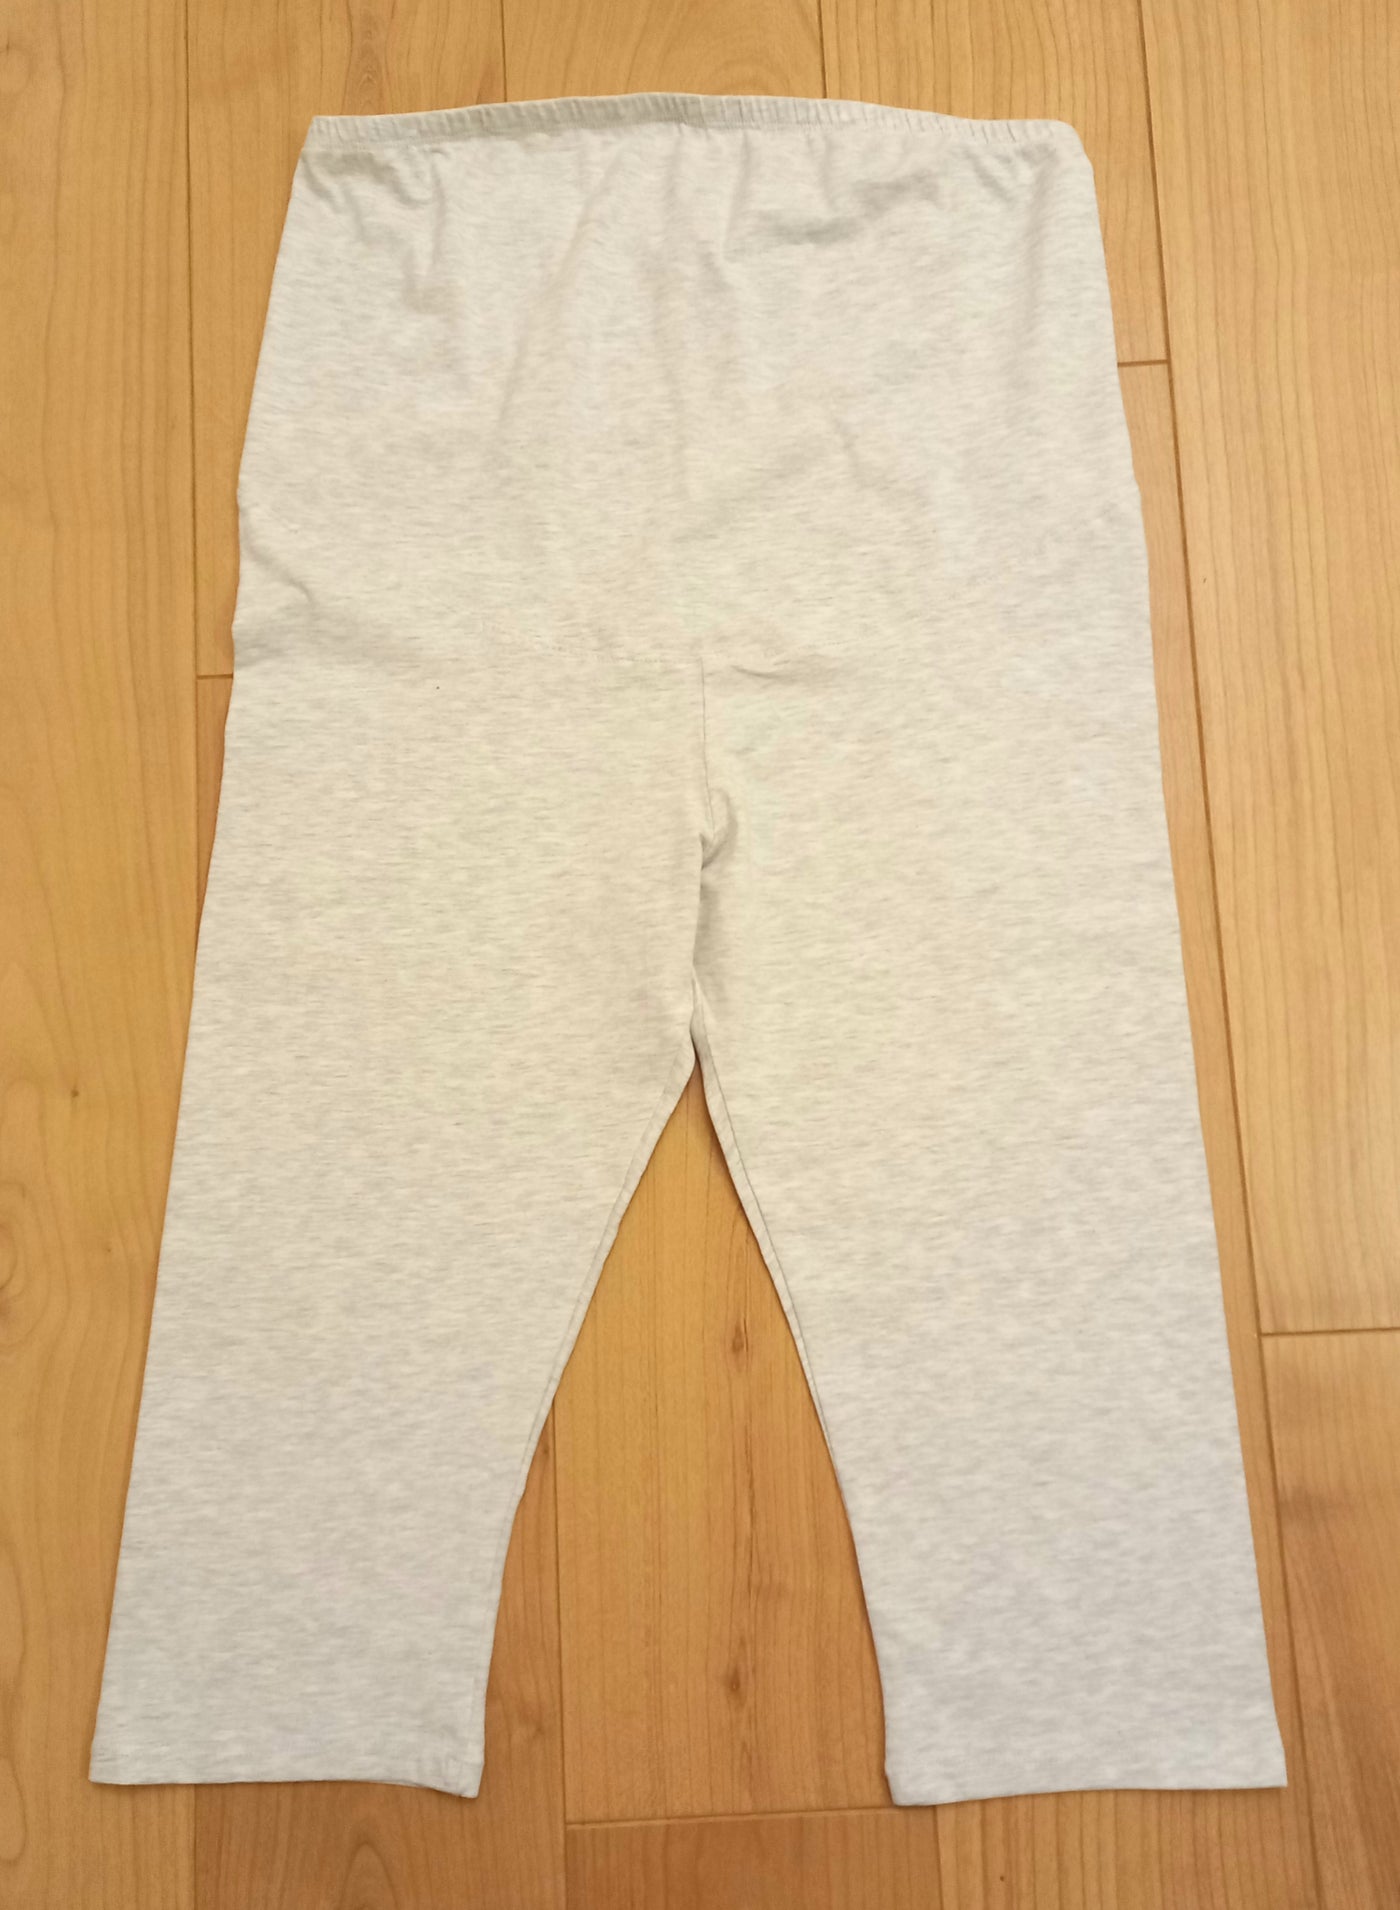 H&M Mama Grey Crop Leggings - Size L (Approx UK 14/16)